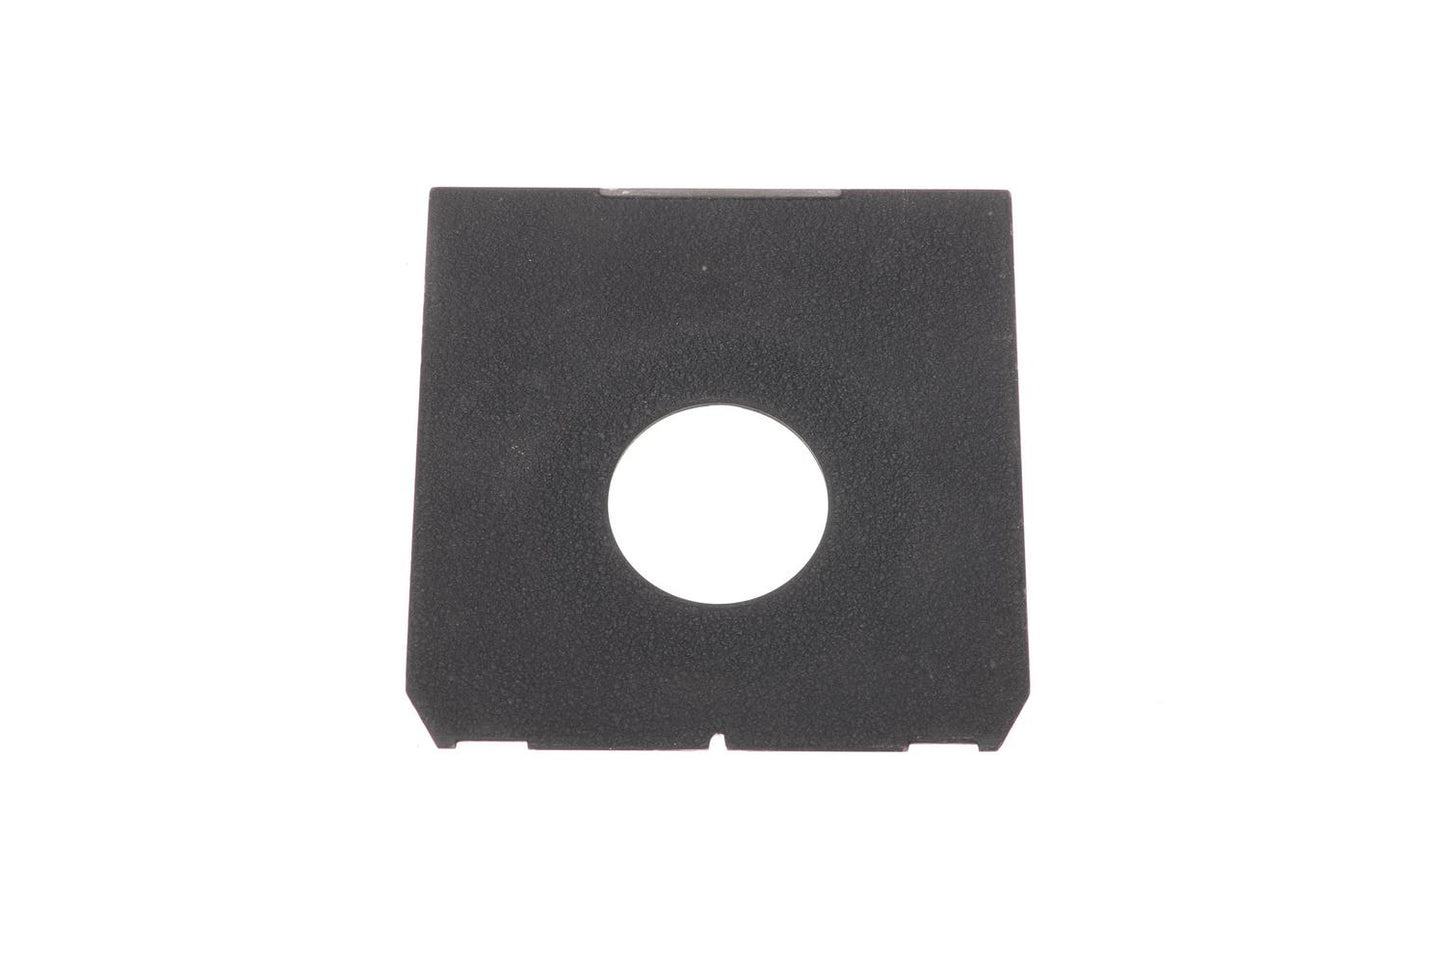 Toyo Lens Board for Linhof/Wista 99 x 96mm Copal #0 - Accessory